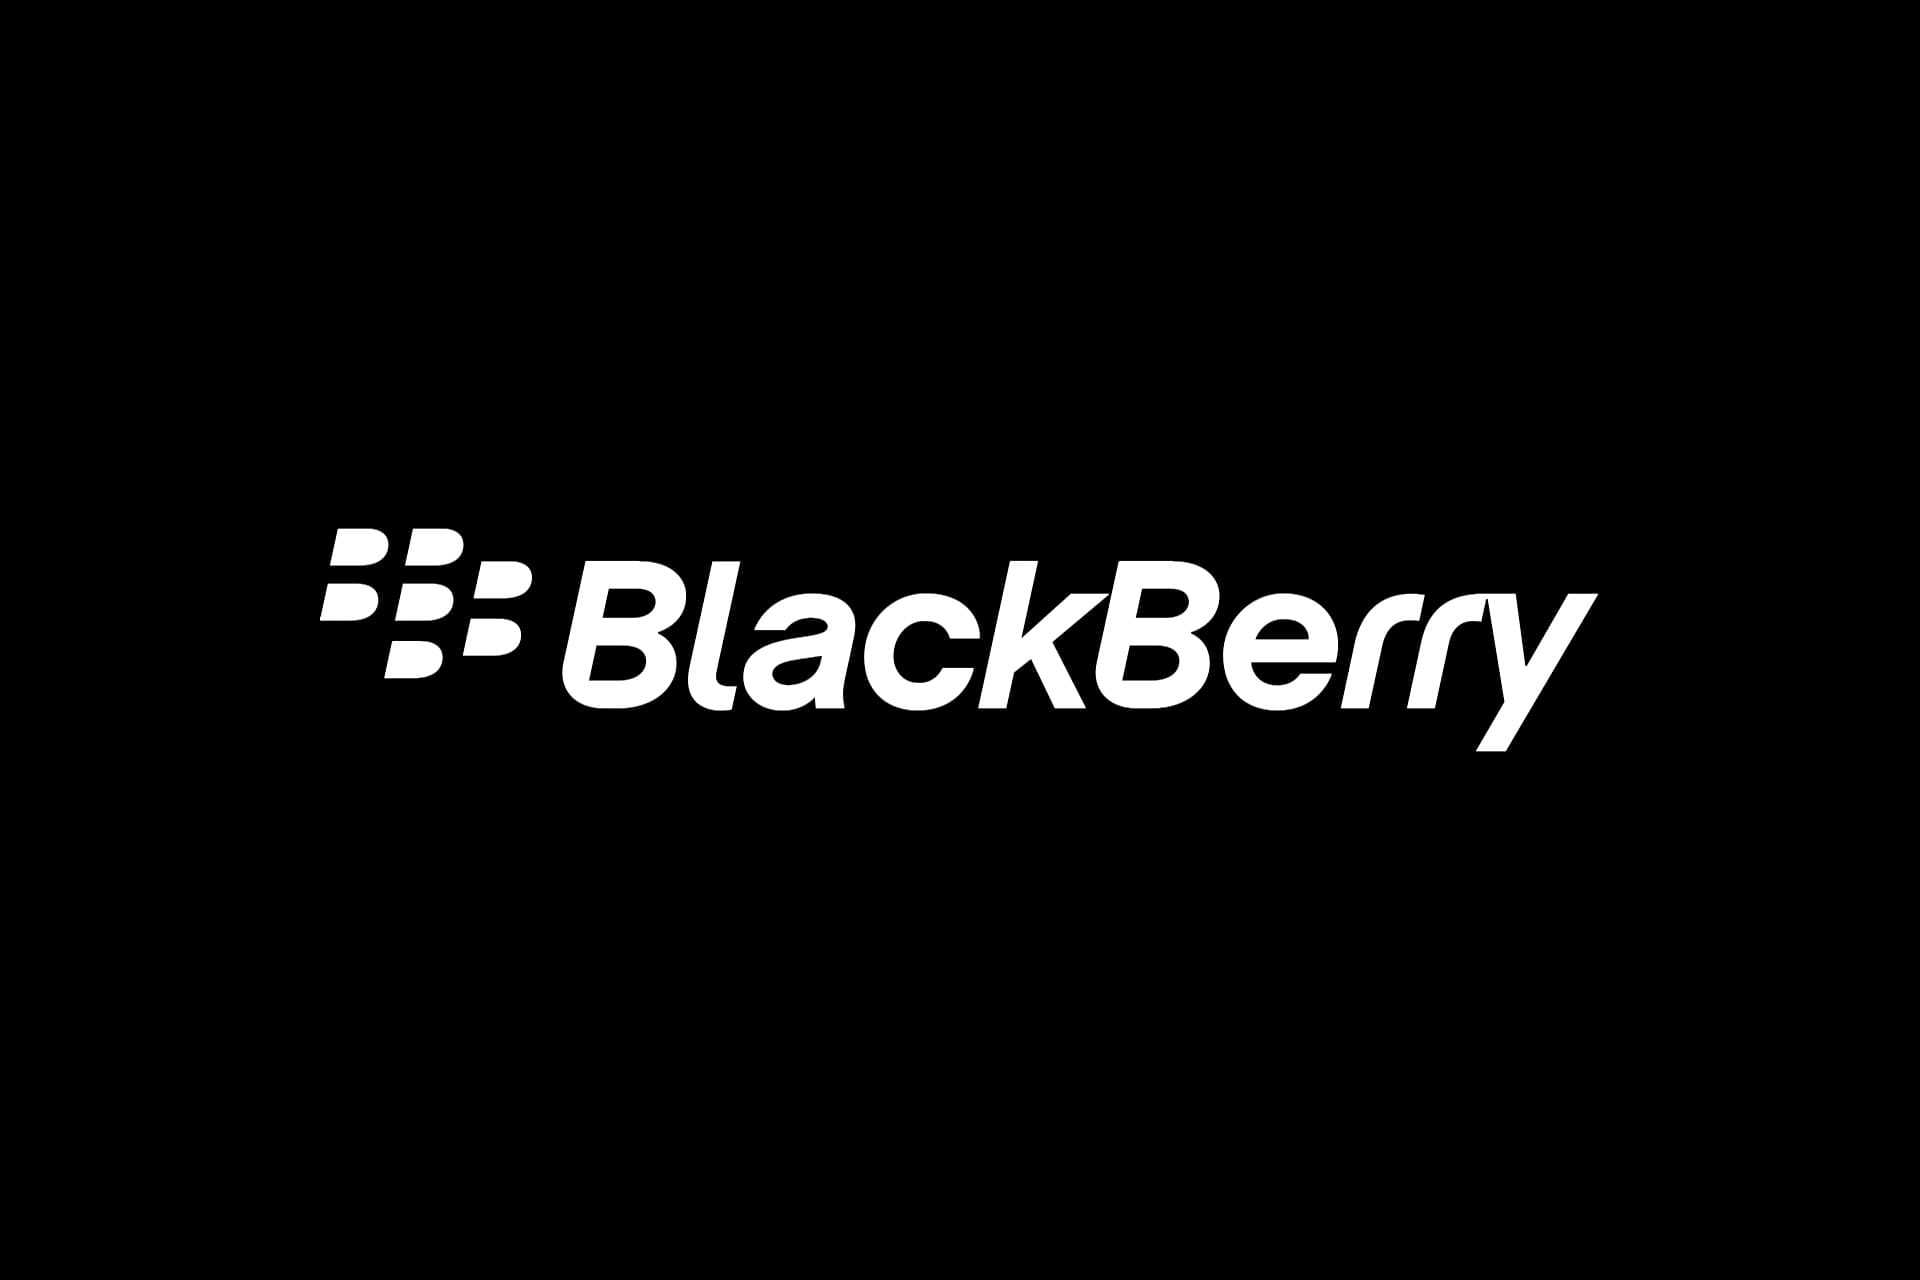 2021 4 blackberry logo slogan white black background 638c67668615ae71282af3c5